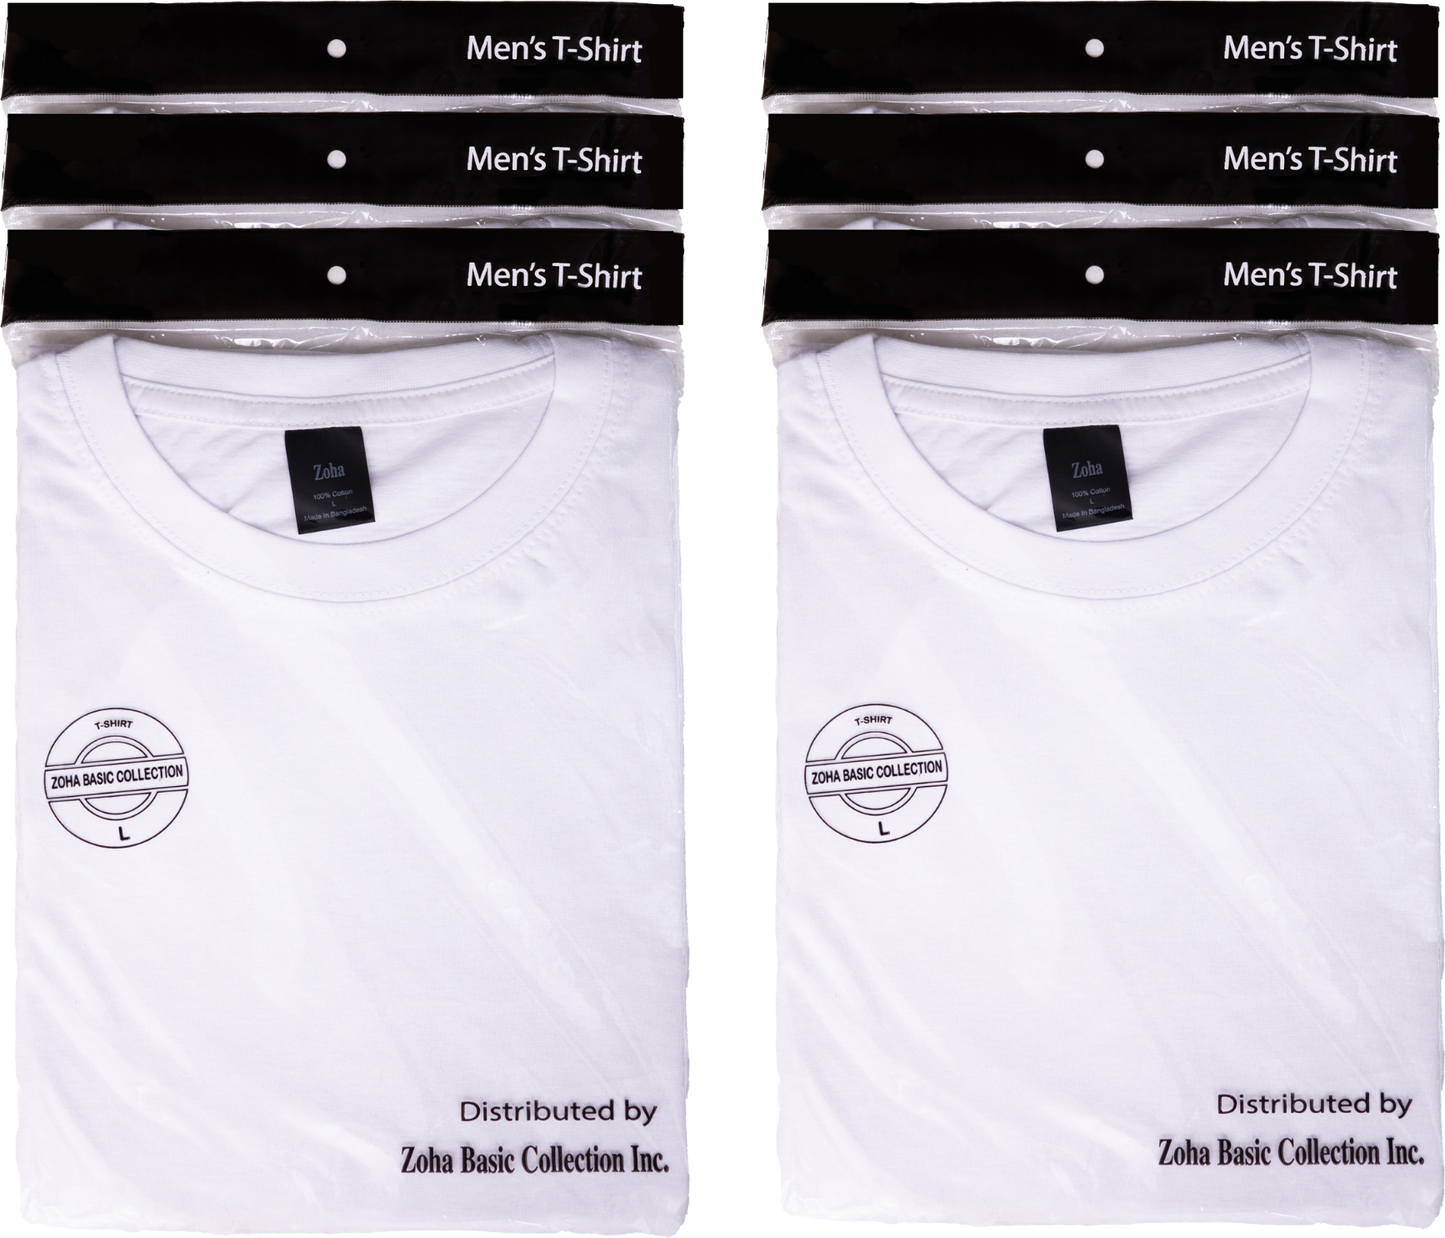 Men's Solid Round Neck White T-Shirt